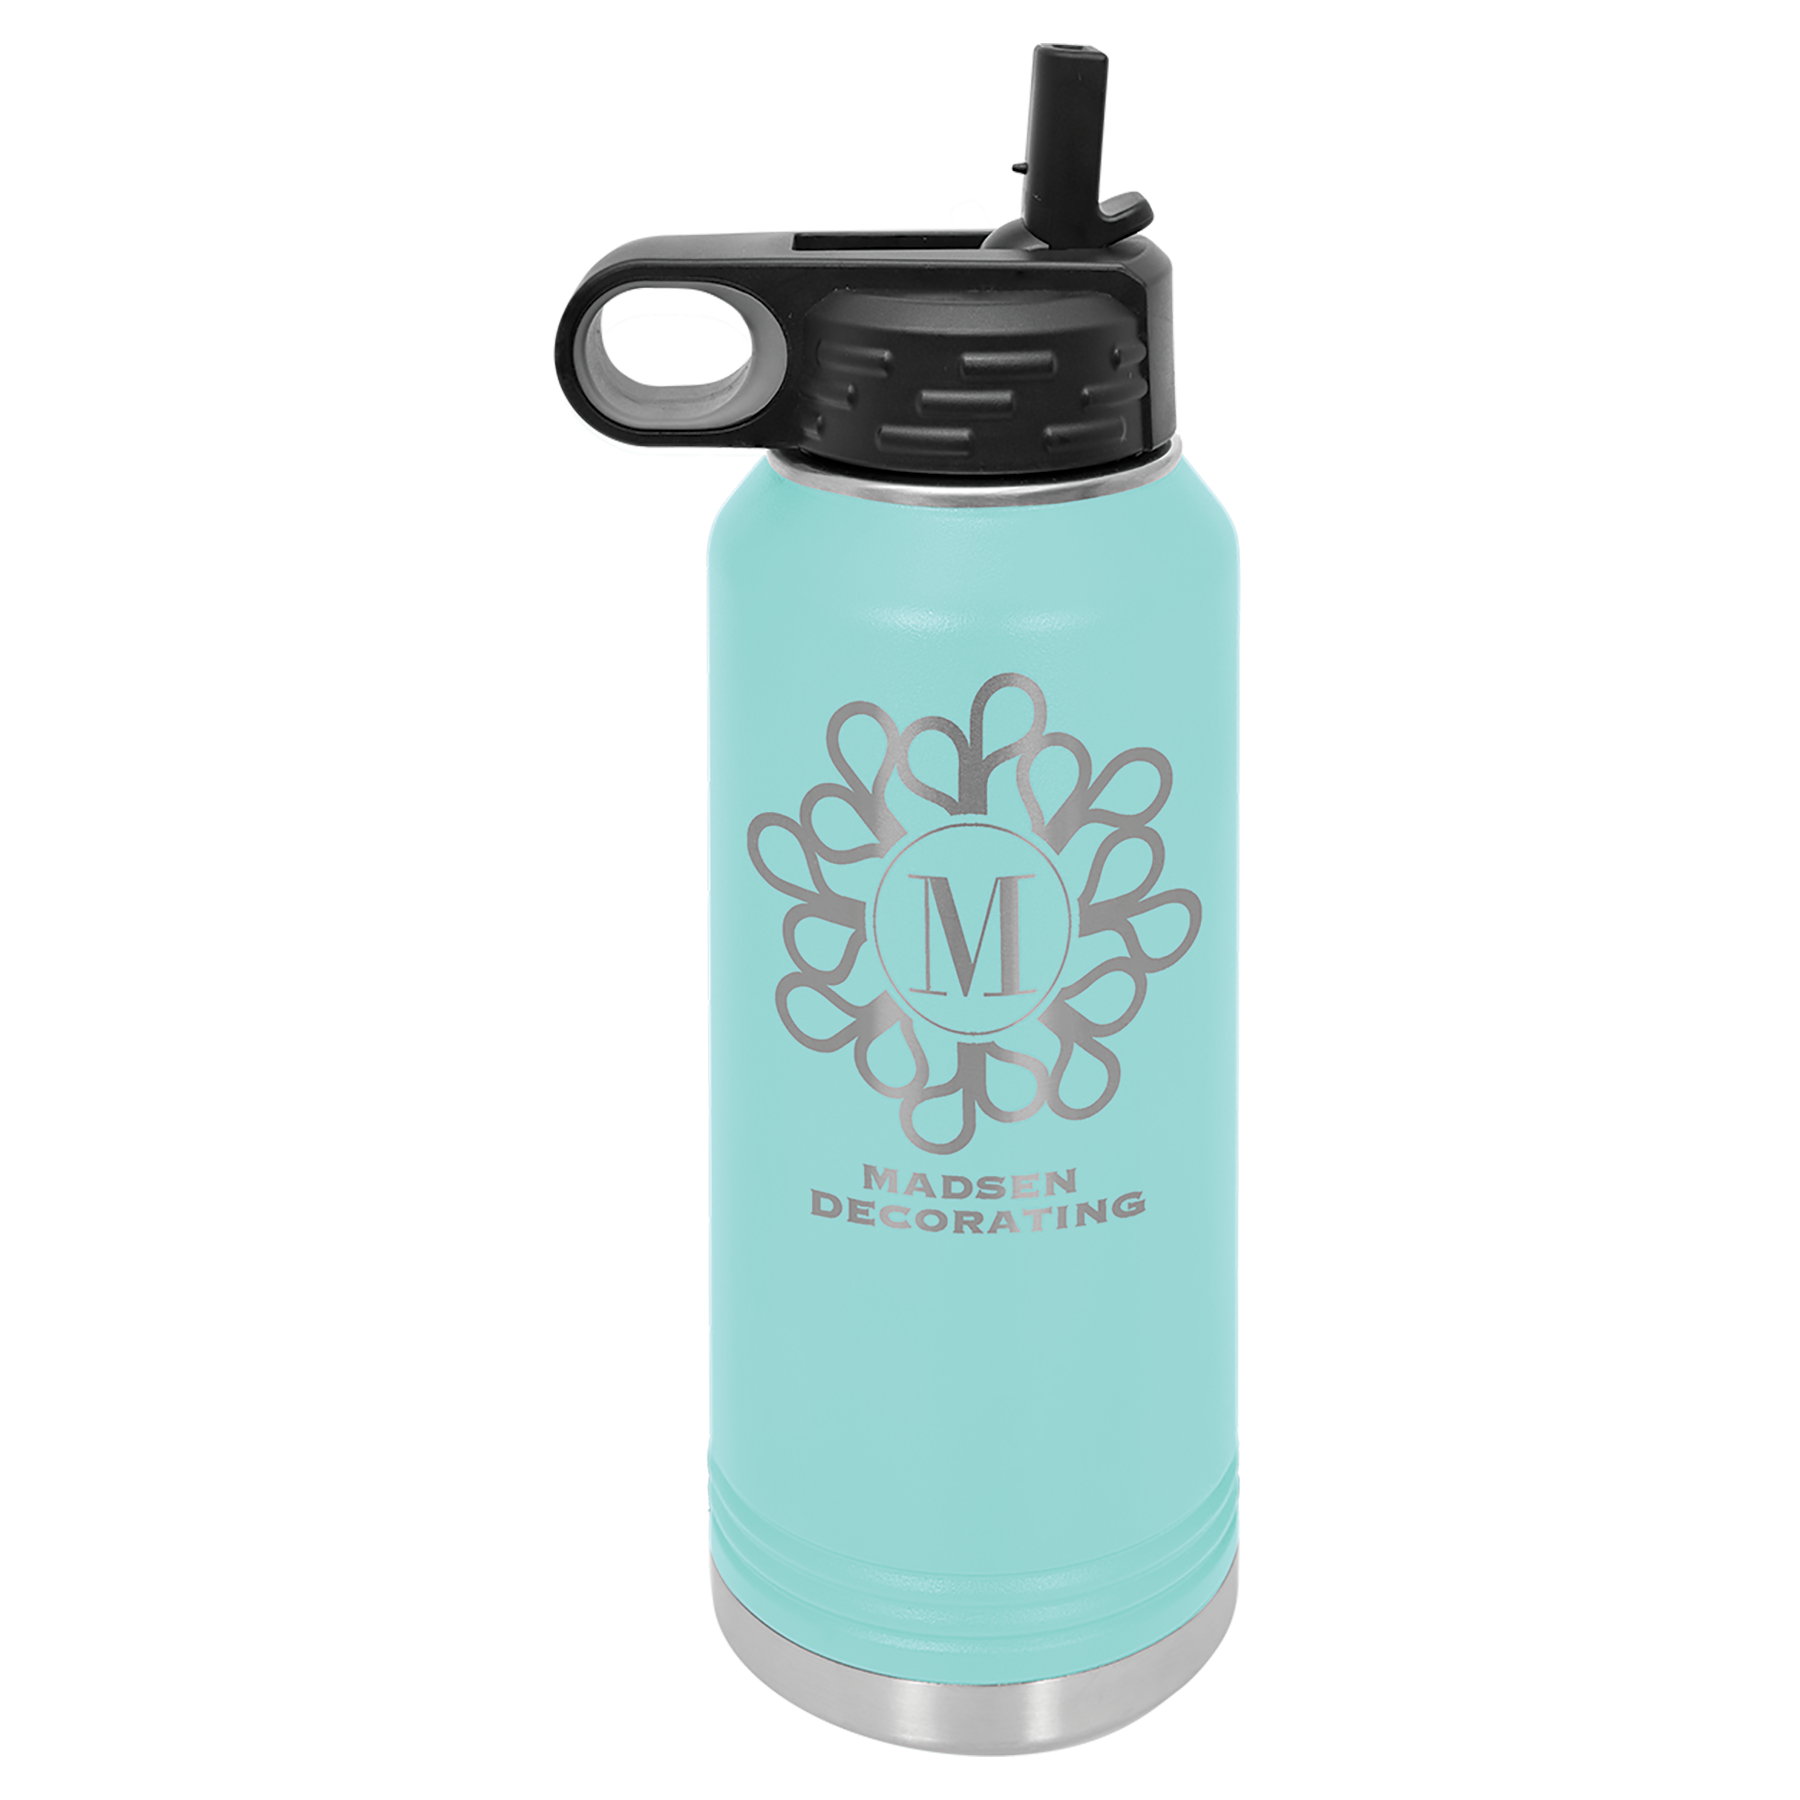 Teal 32oz Water Bottle